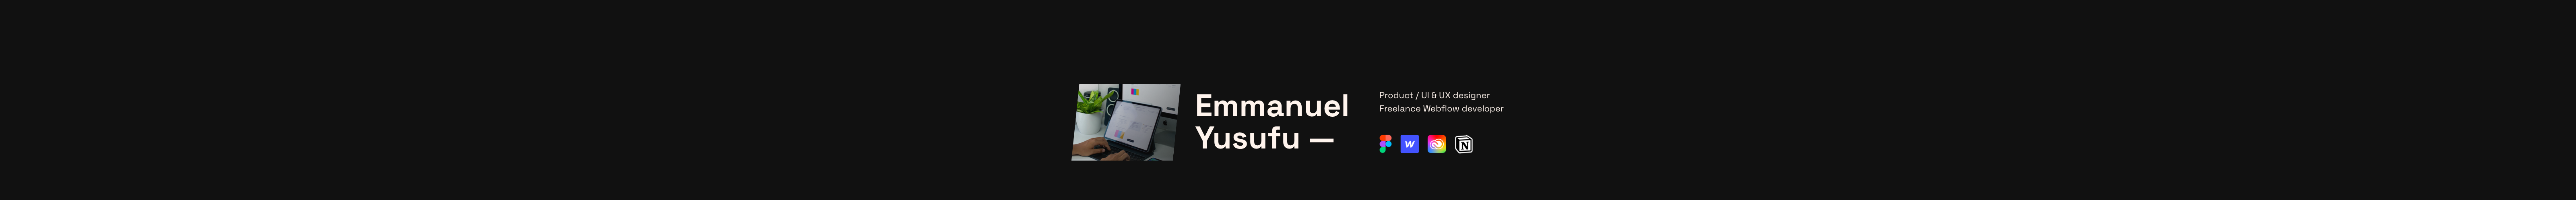 Emmanuel Yusufu's profile banner